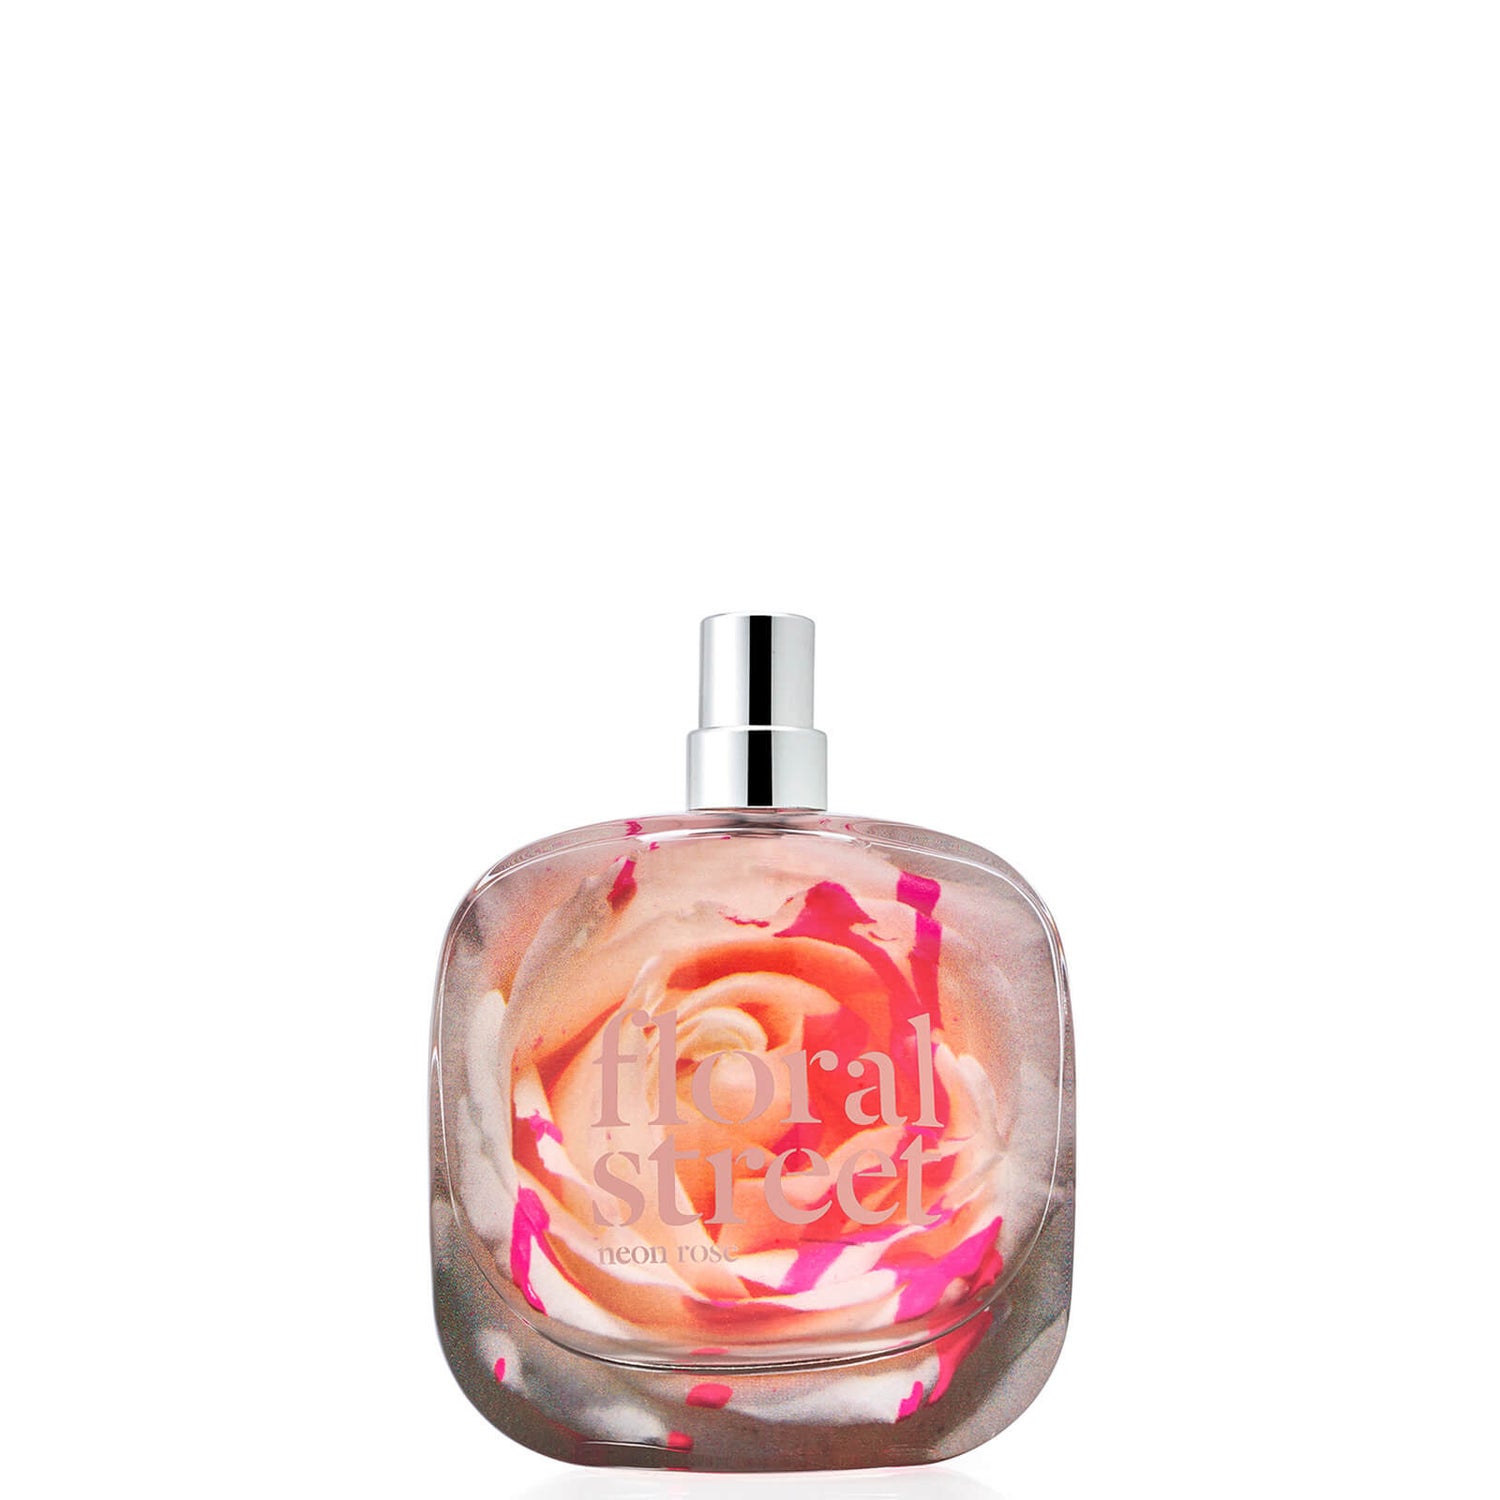 Floral Street Neon Rose Eau de Parfum 50ml - LOOKFANTASTIC